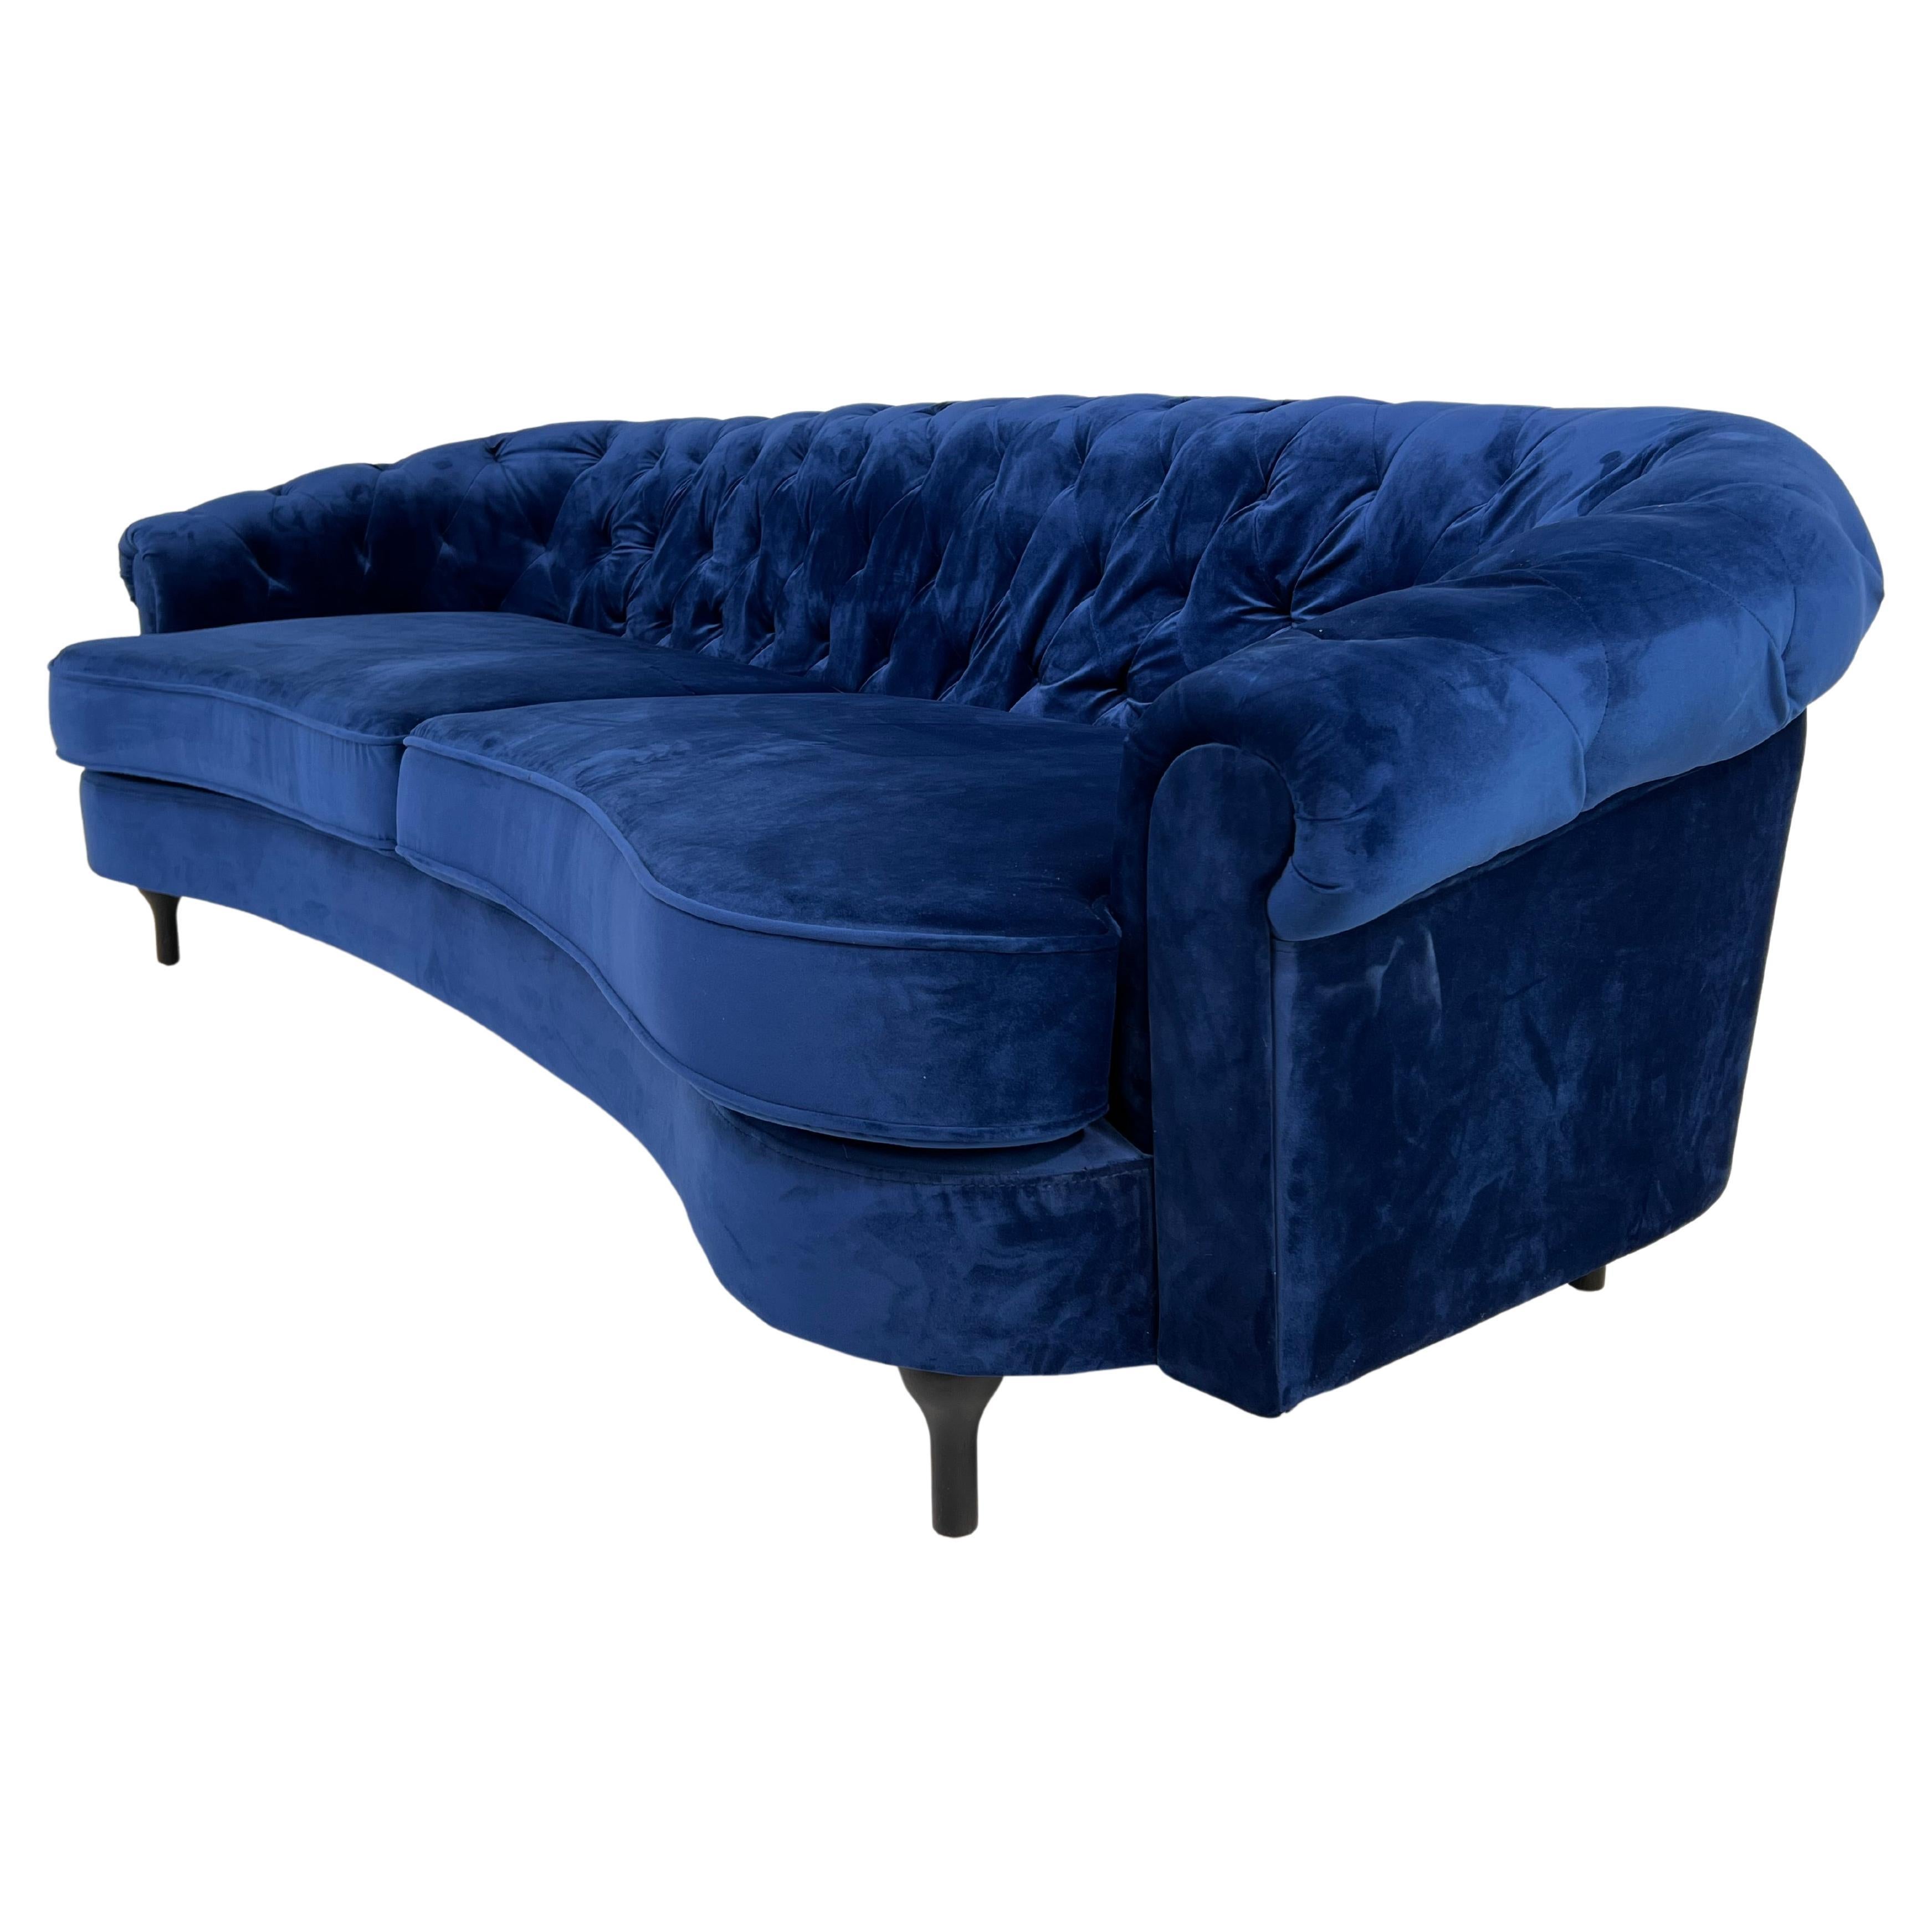 Deep blue velvet and black feet padded soft and comfy sofa.